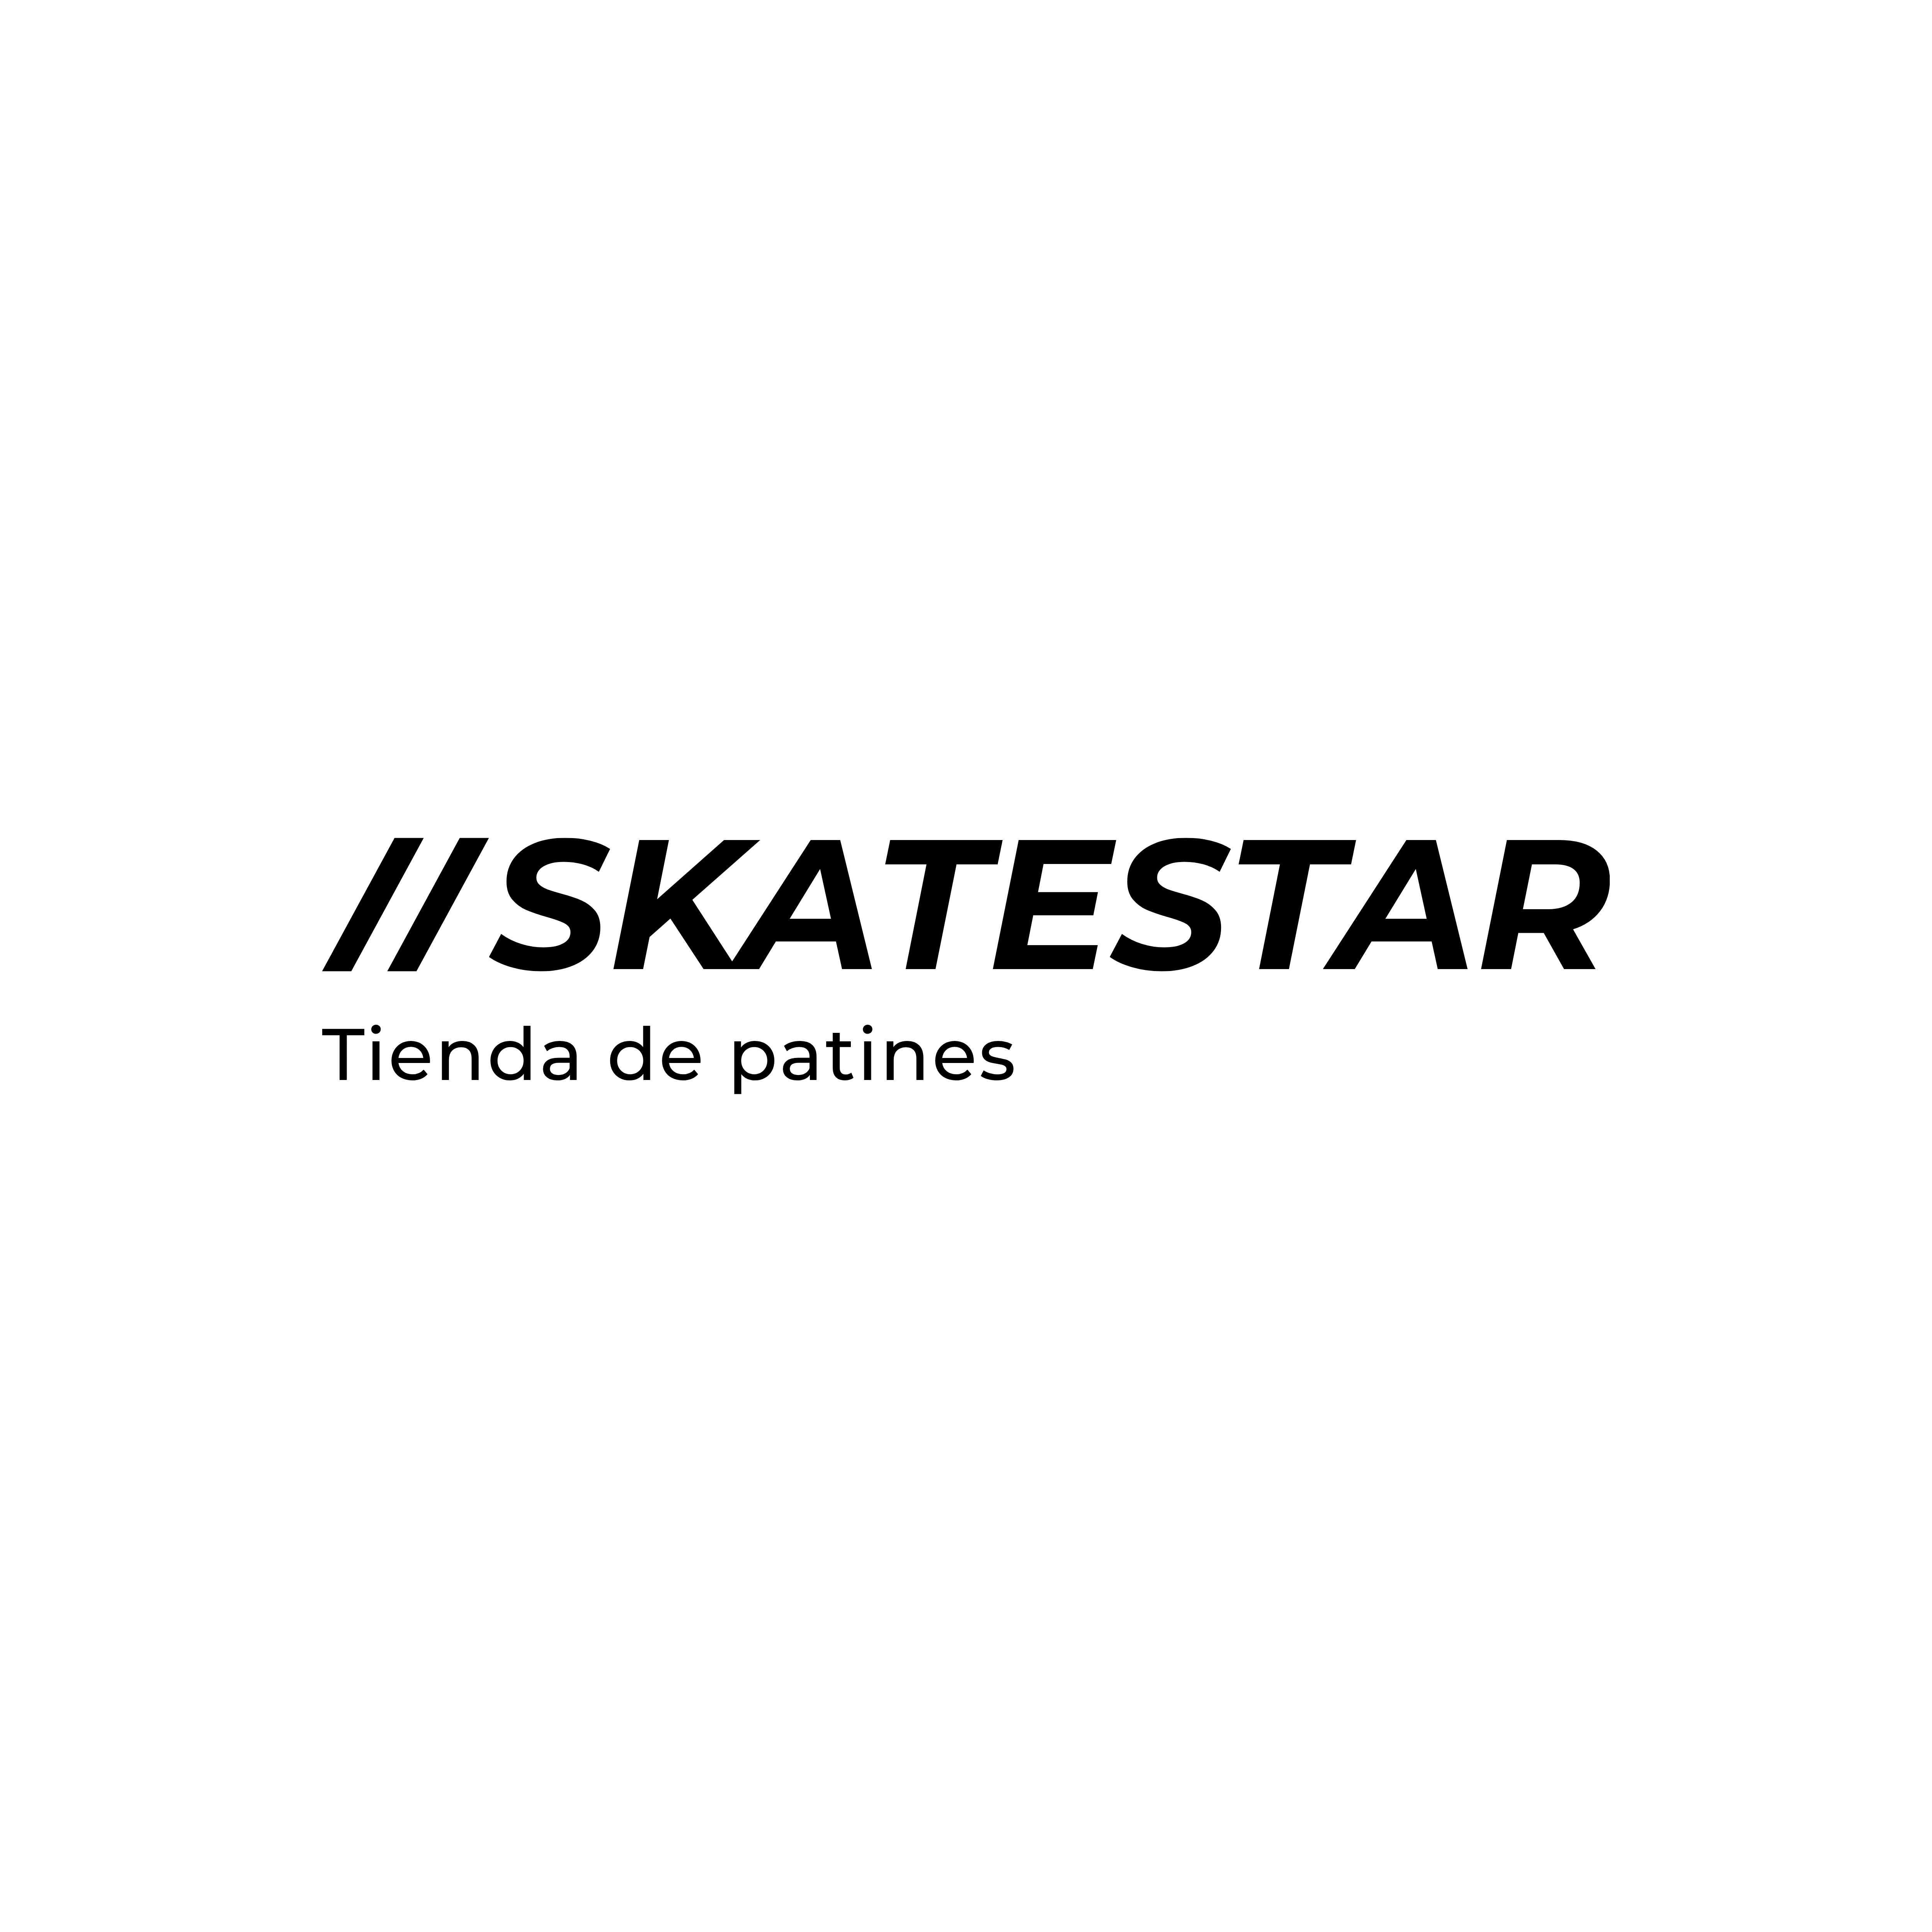 Tienda de patines - SKATESTAR